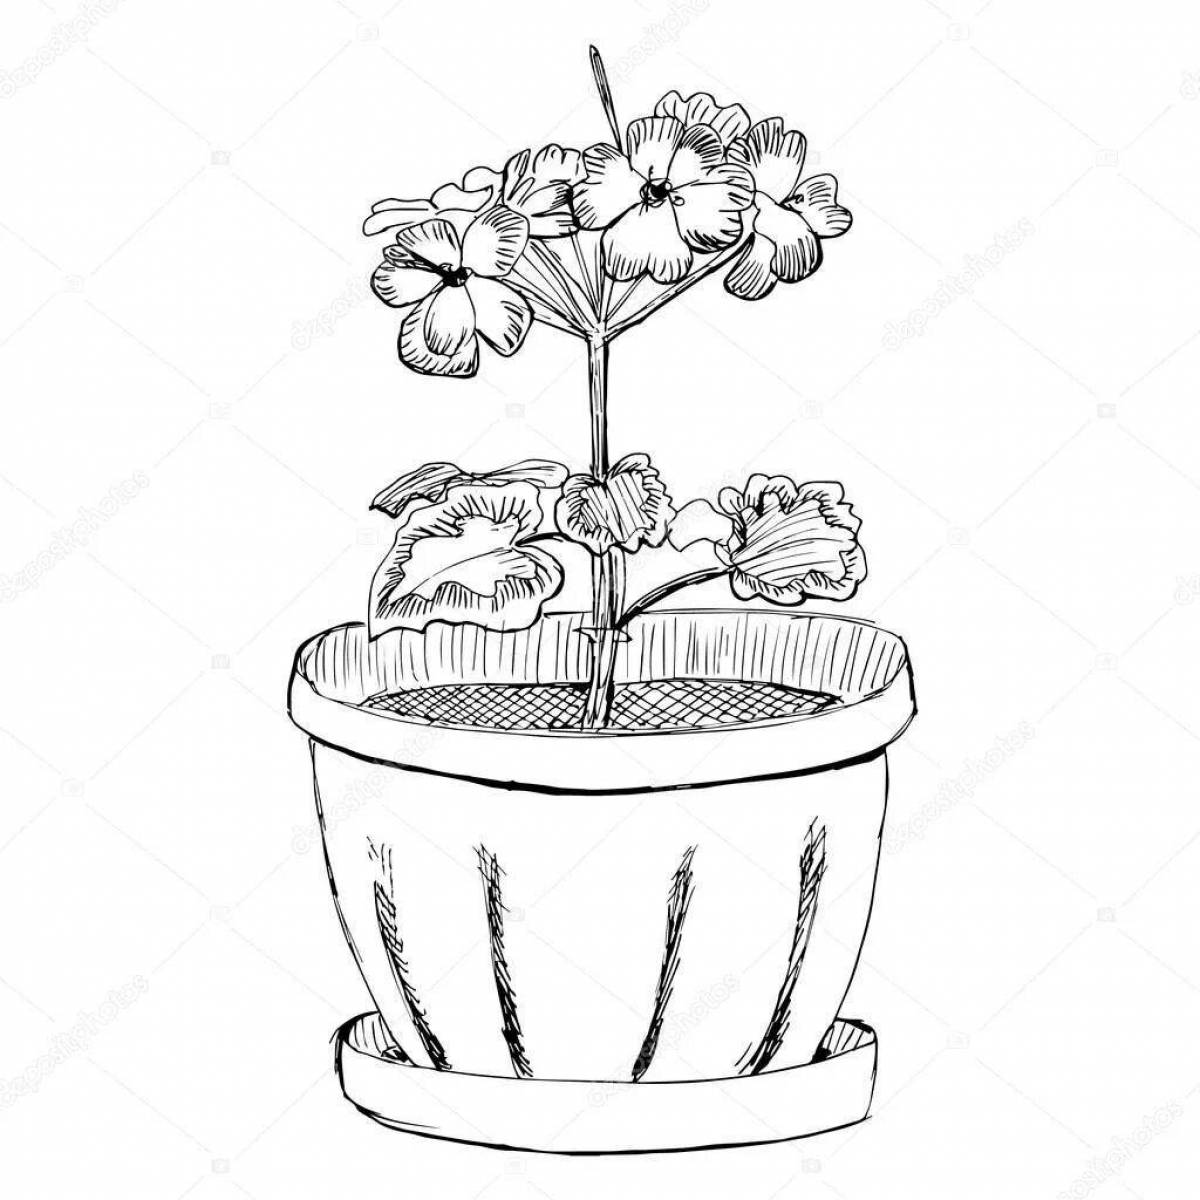 Charming potted geranium for children